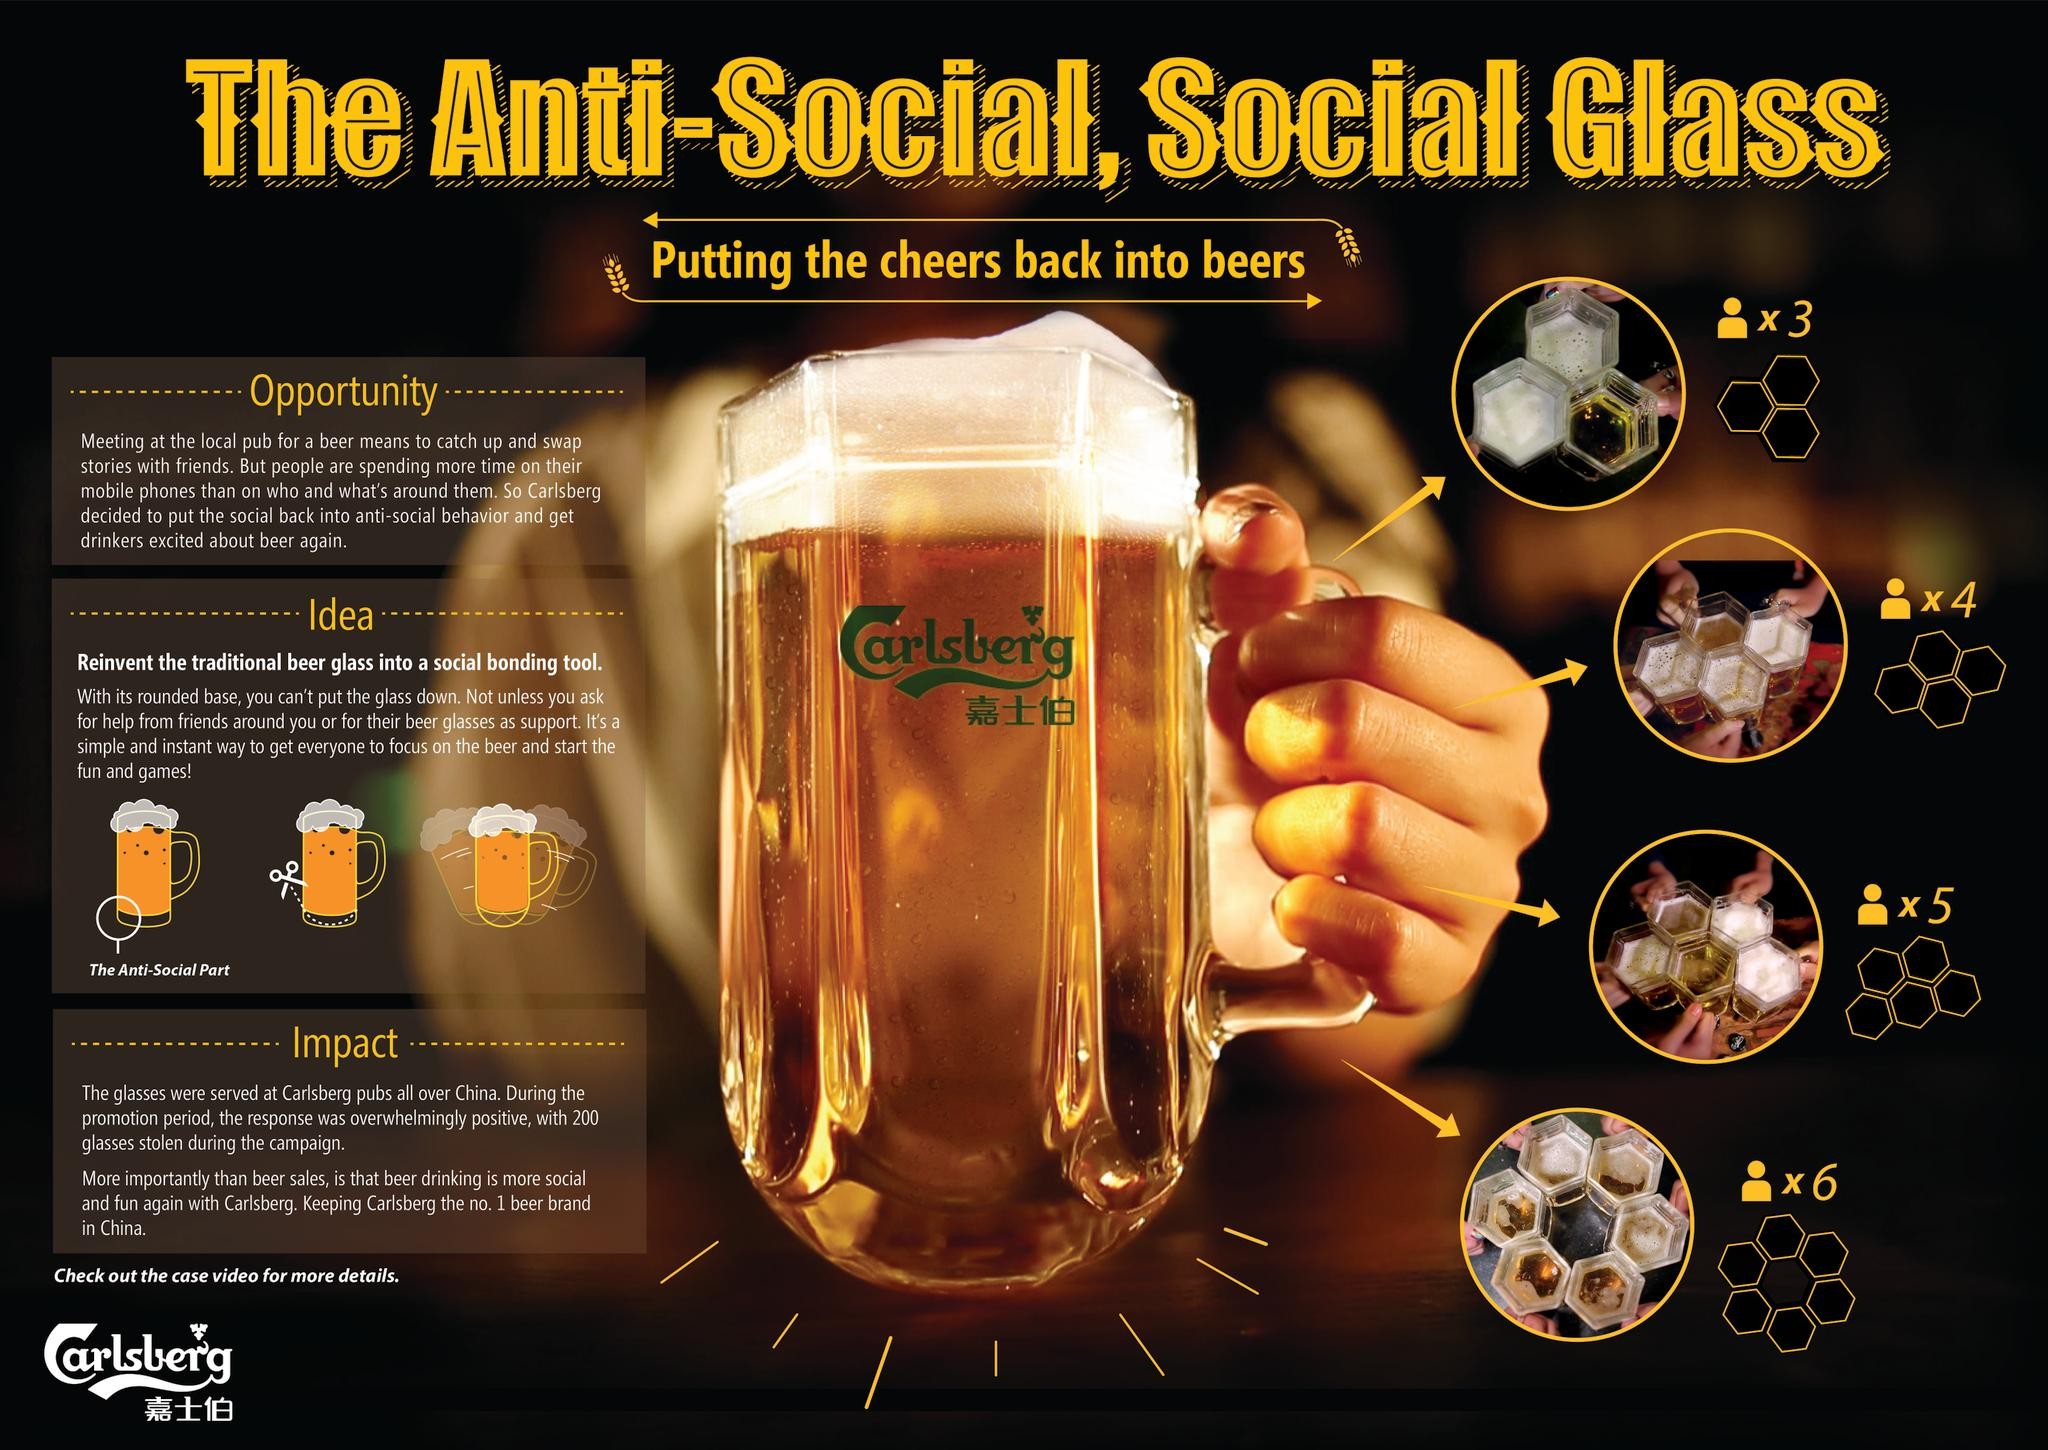 THE ANTI-SOCIAL,SOCIAL GLASS